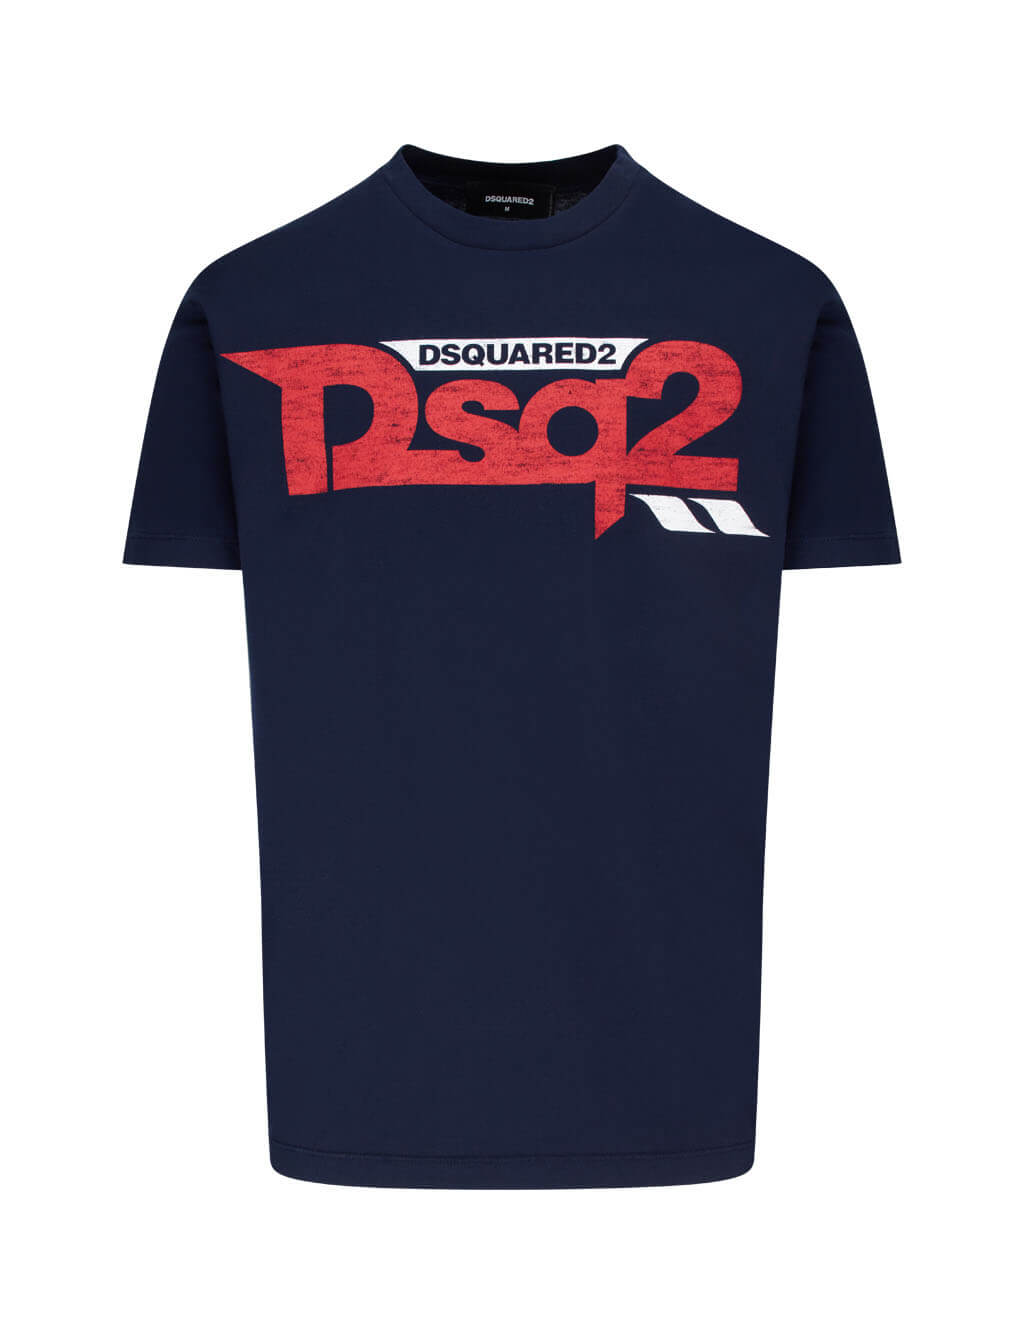 dsq2 t-shirt